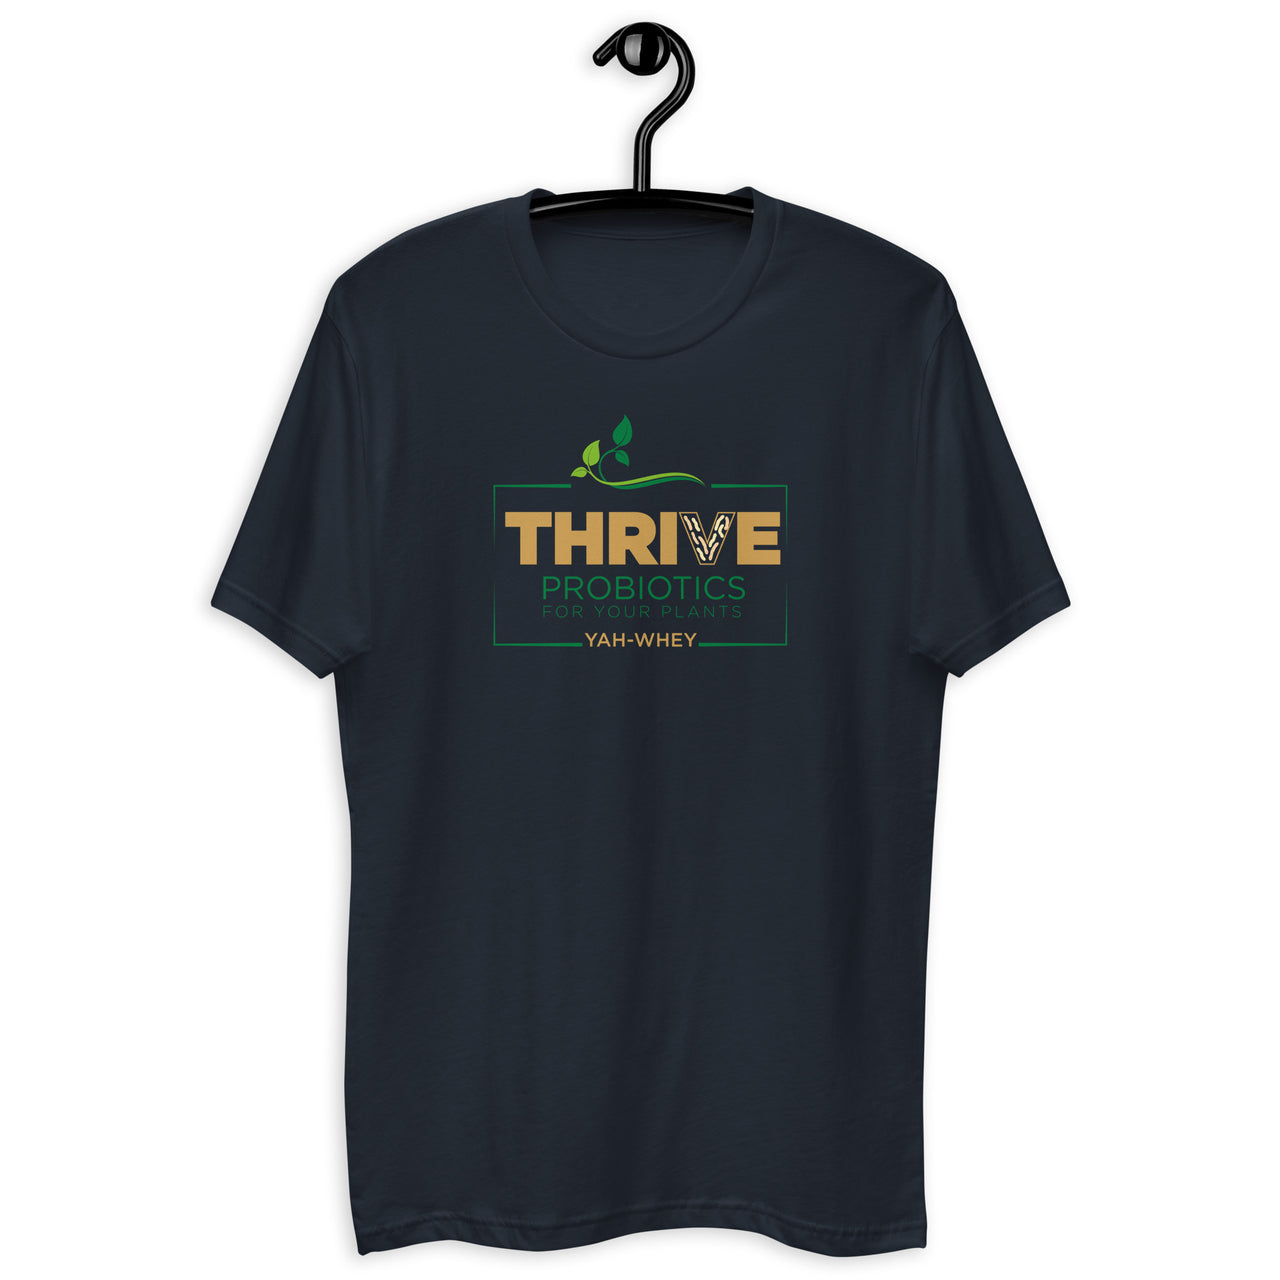 Thrive Probiotics - Logo Tee